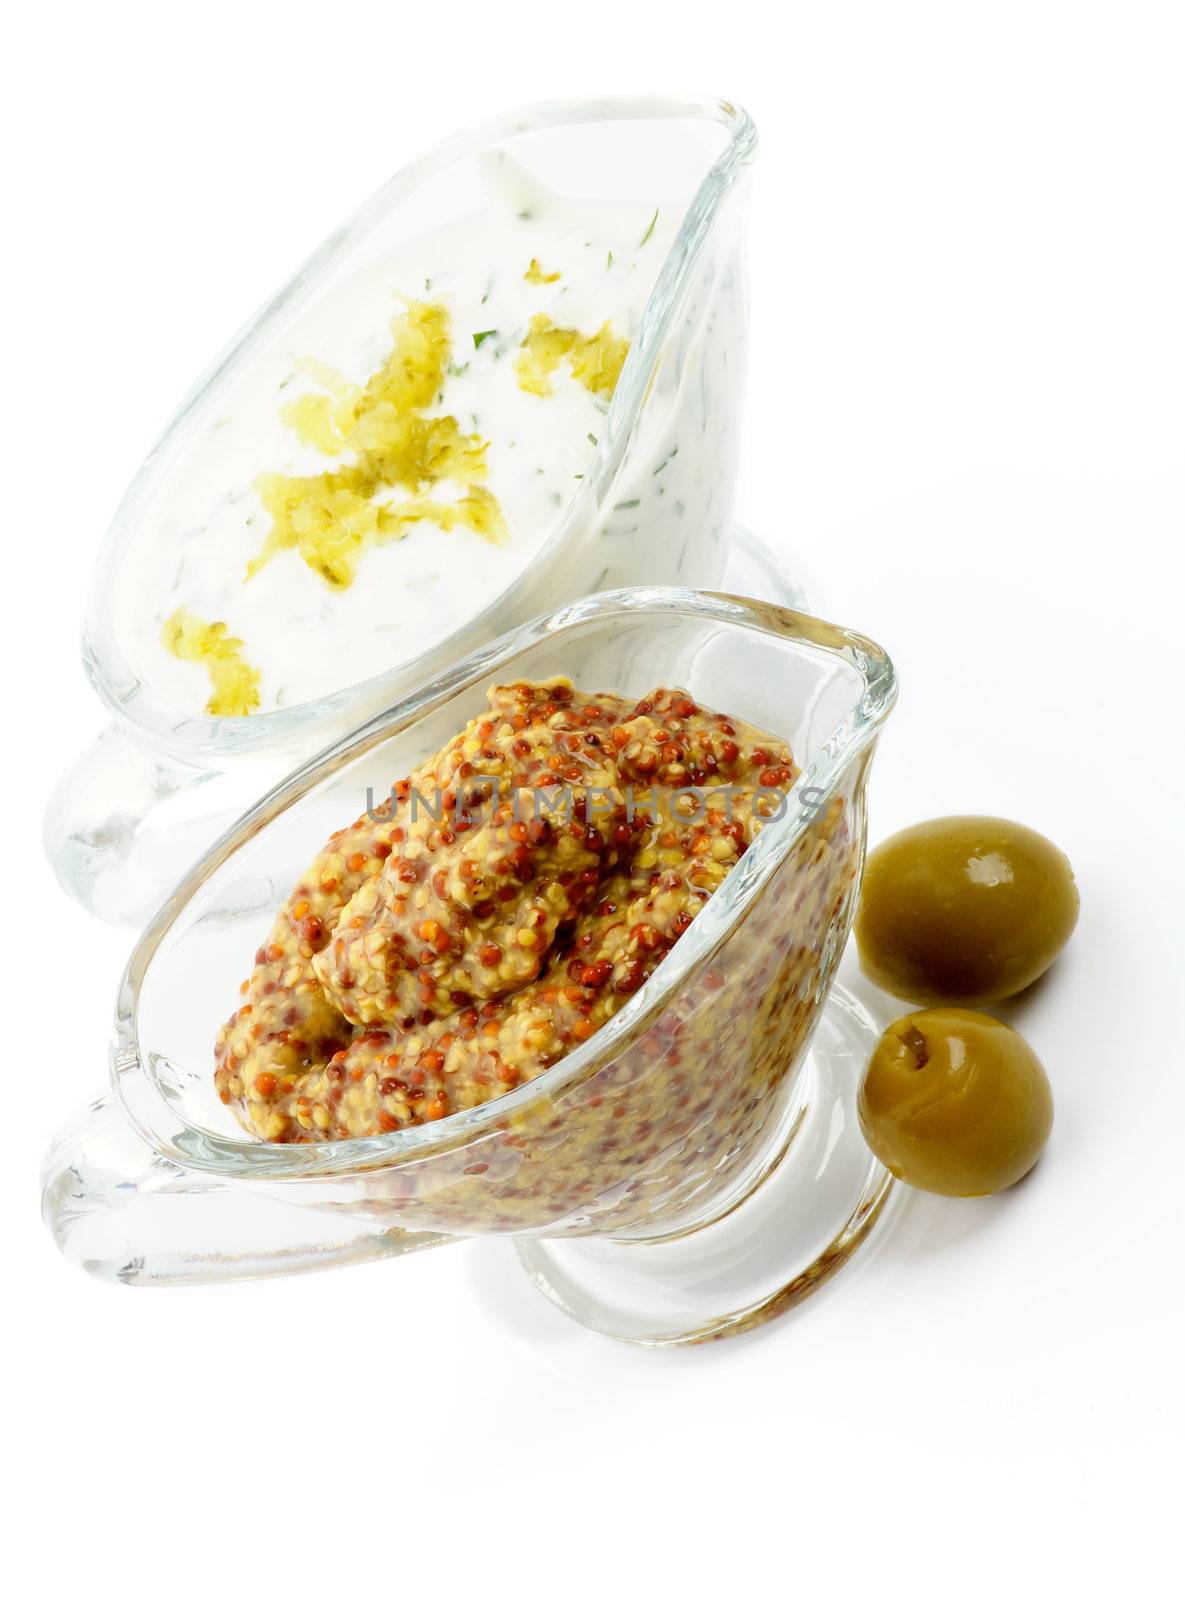 Mustard and Tartar by zhekos